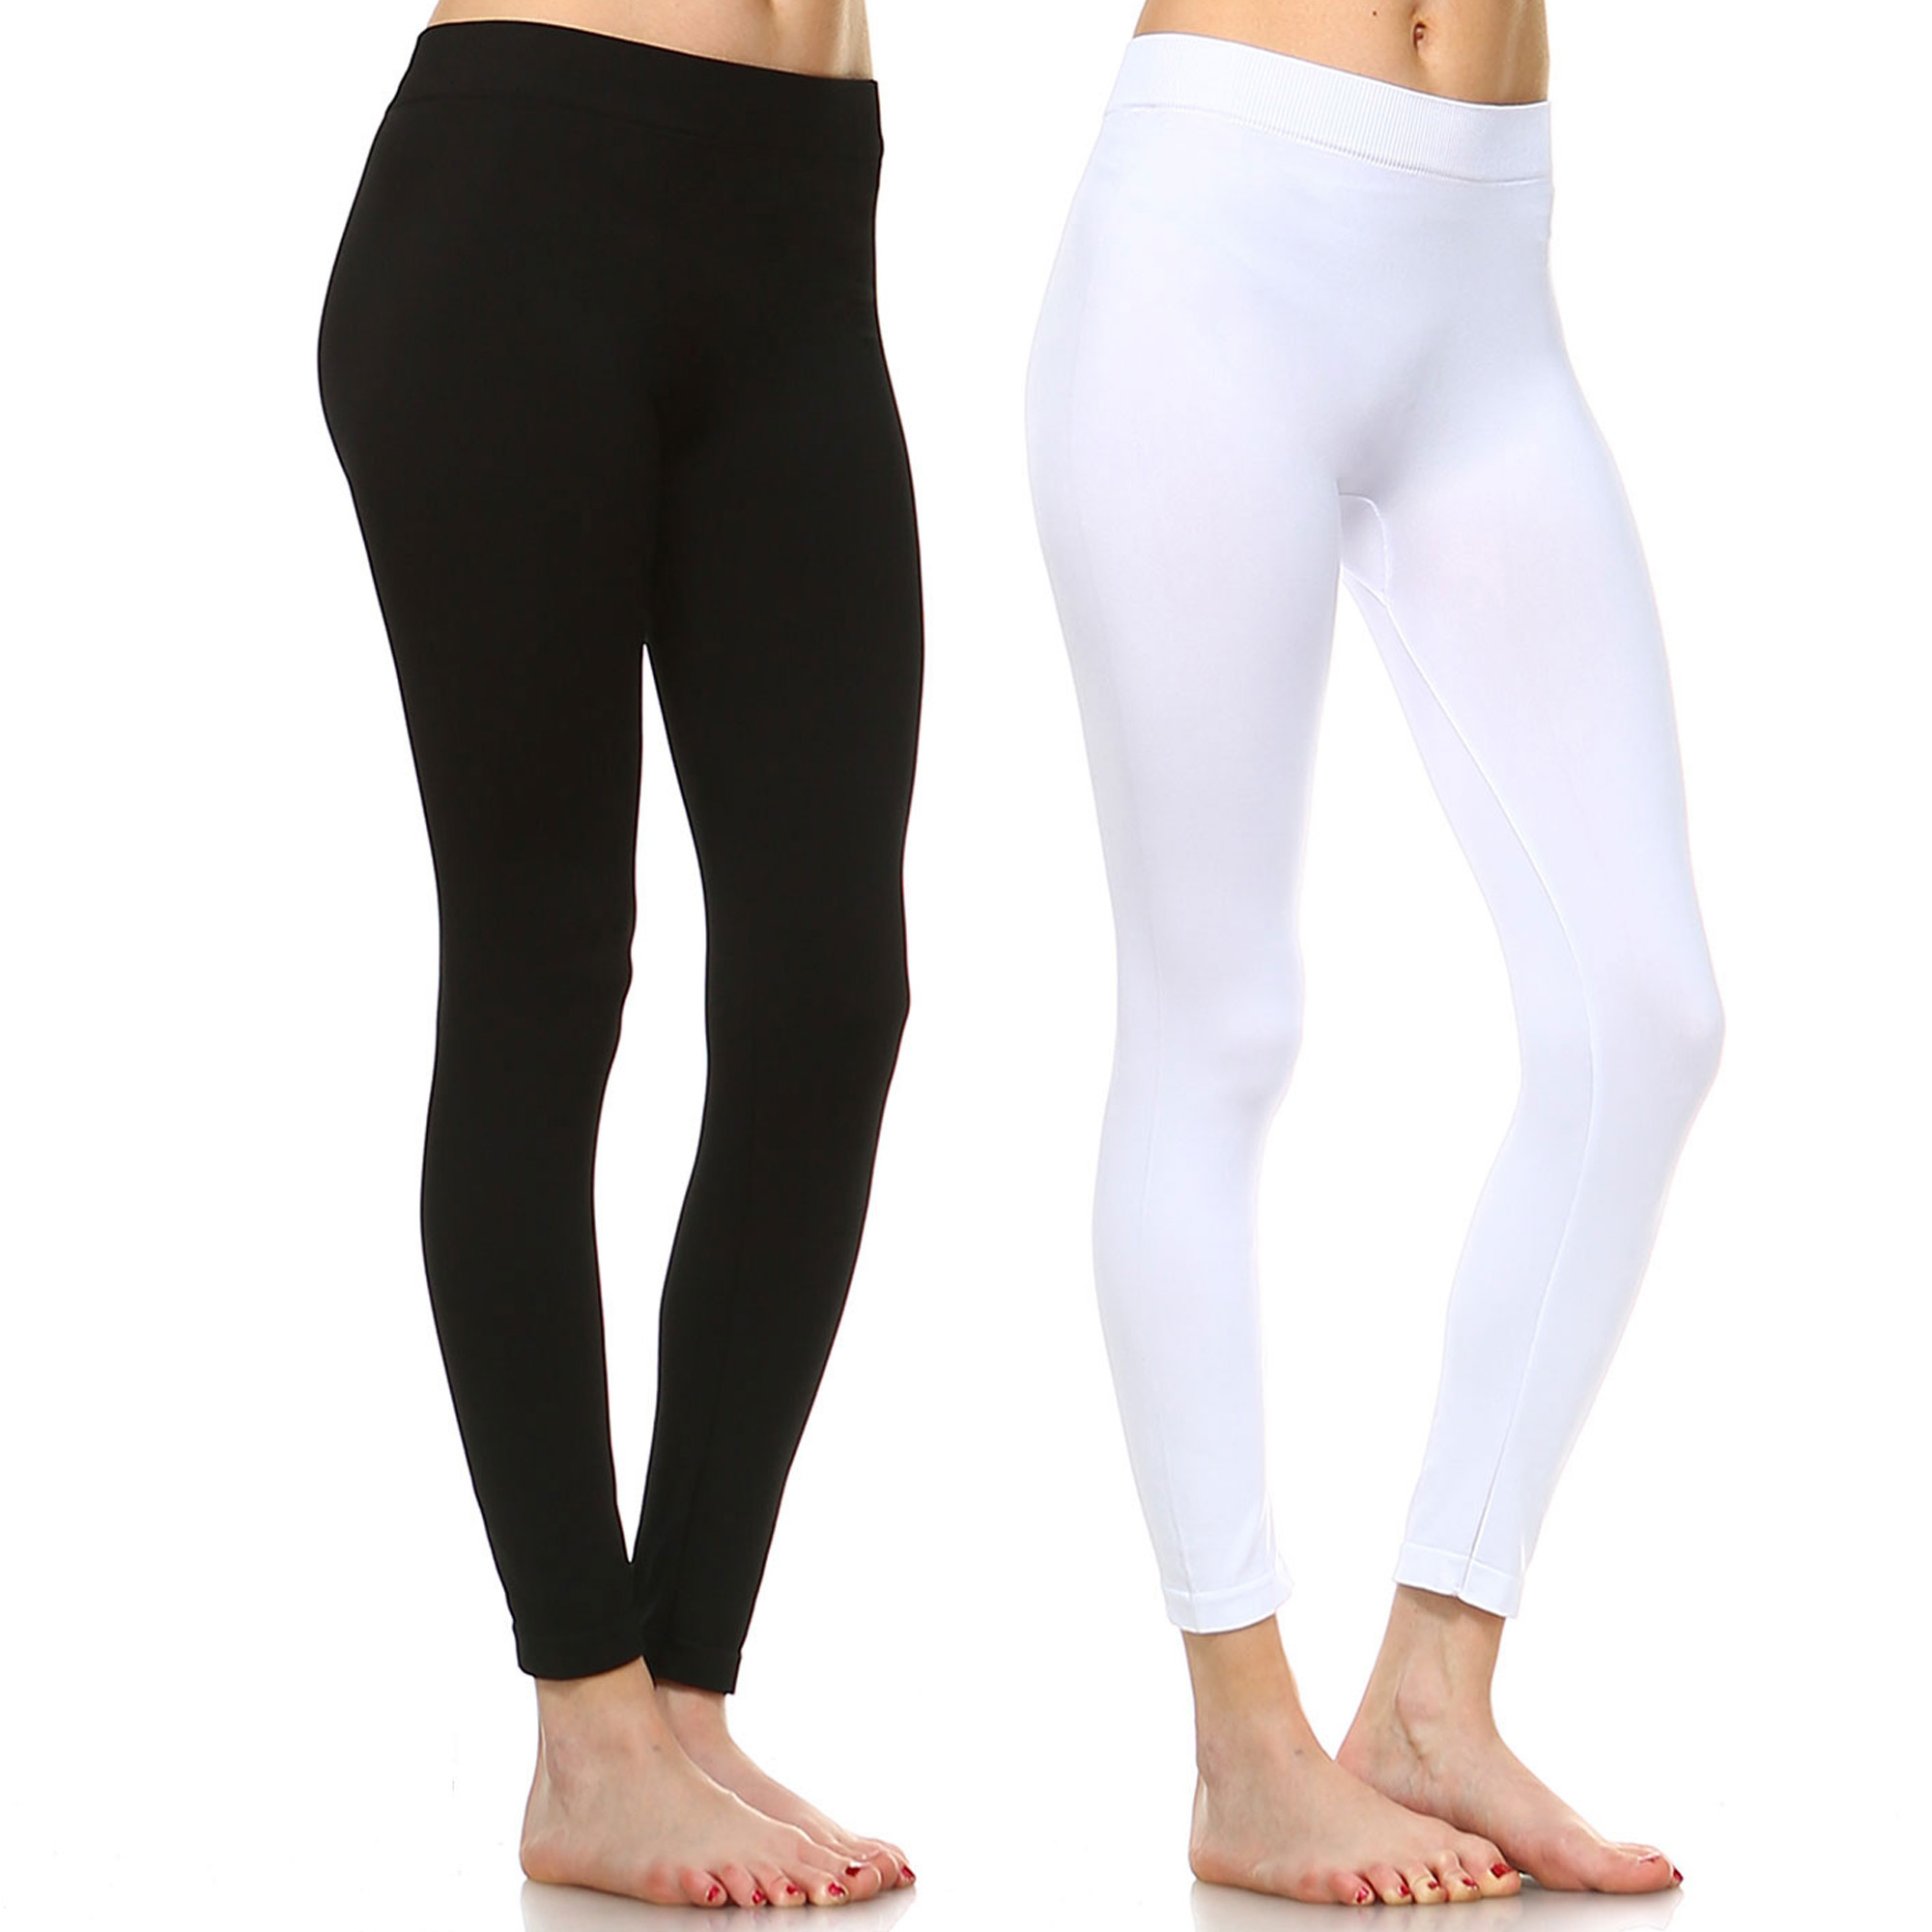 White Mark Women's Pack Of 2 Solid Color Leggings - Black, White, One Size - Missy